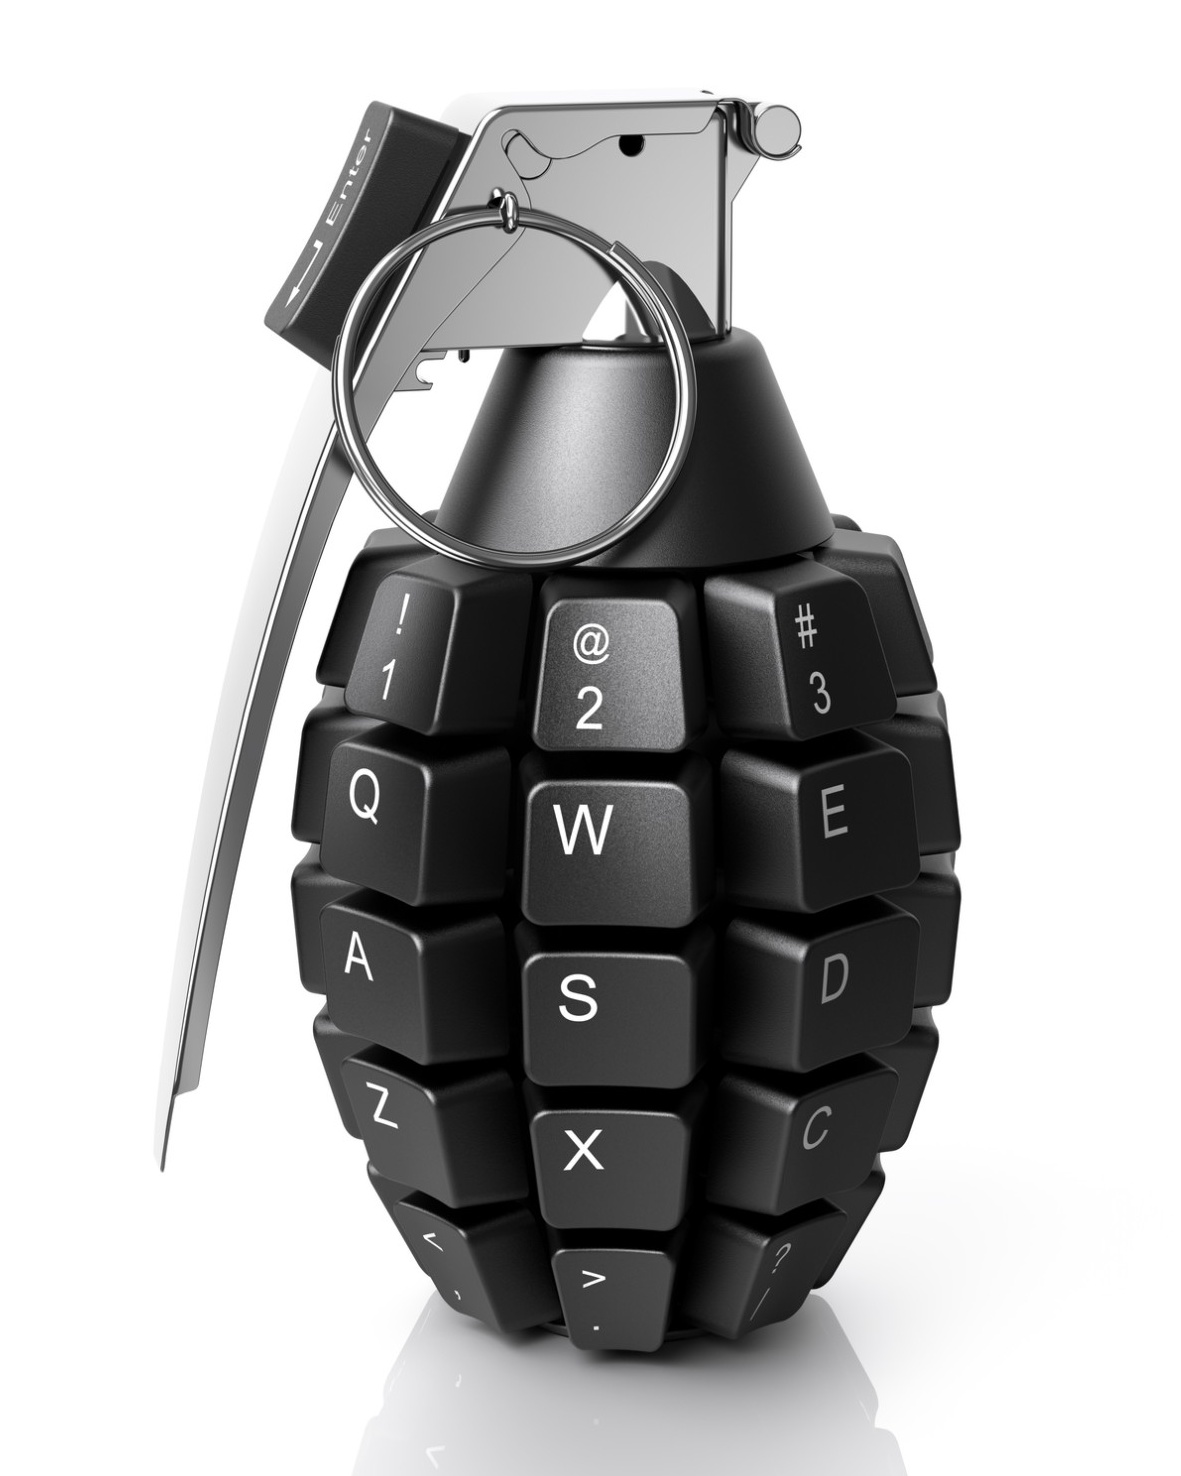 Grenade with computer keys. 